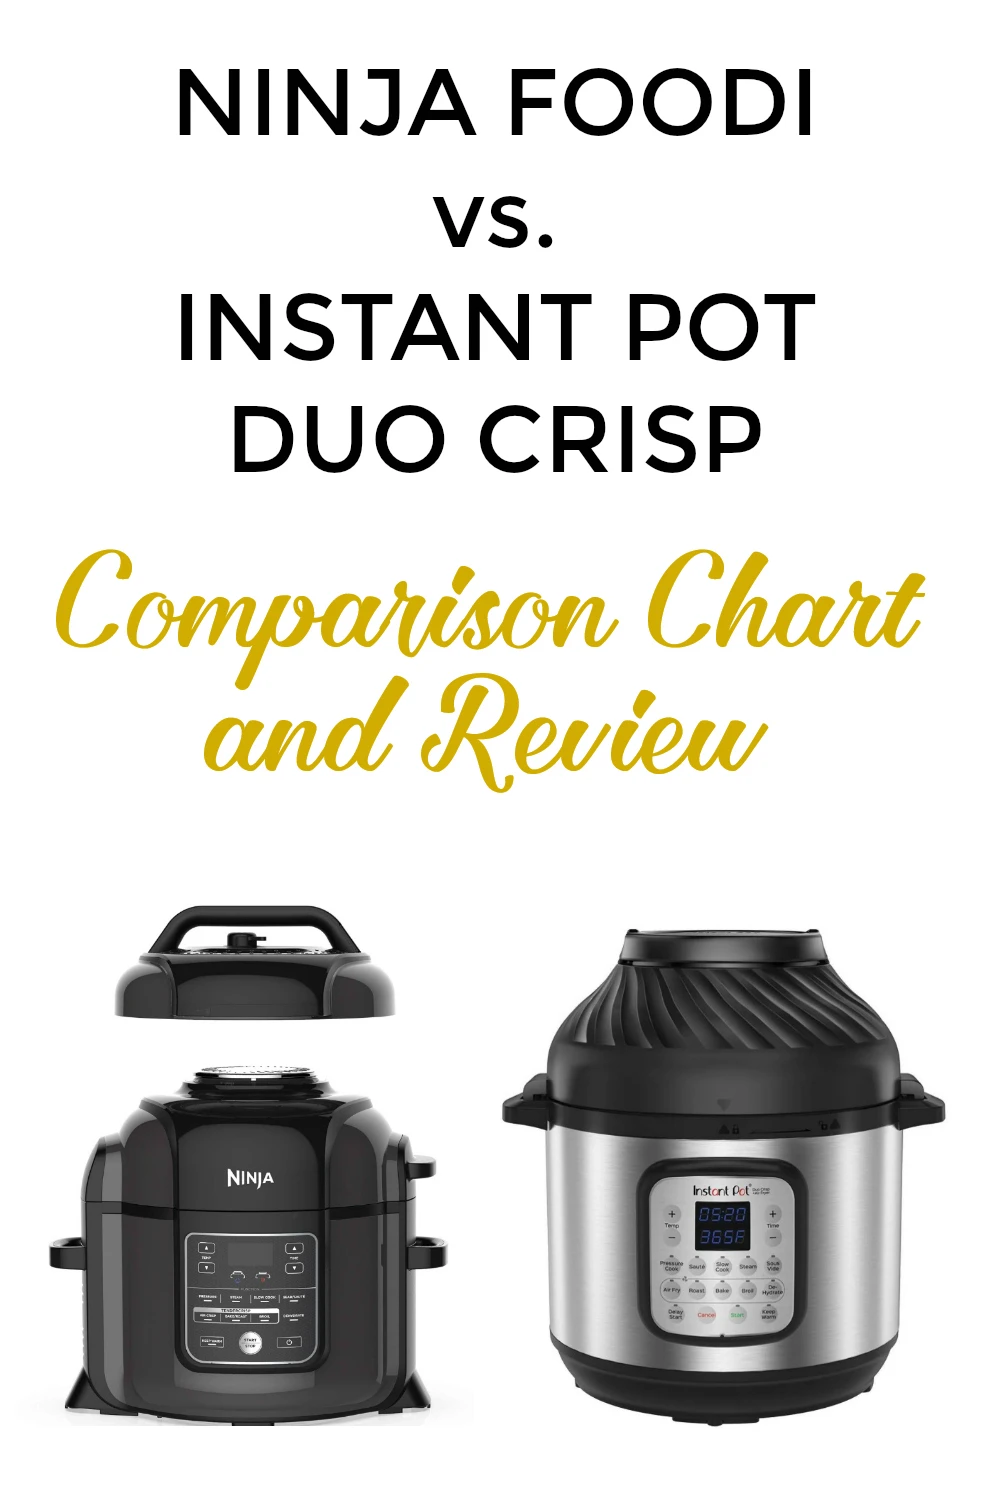 Ninja Foodi vs. Instant Pot Duo Crisp with Comparison Chart - Instant Pot  Cooking